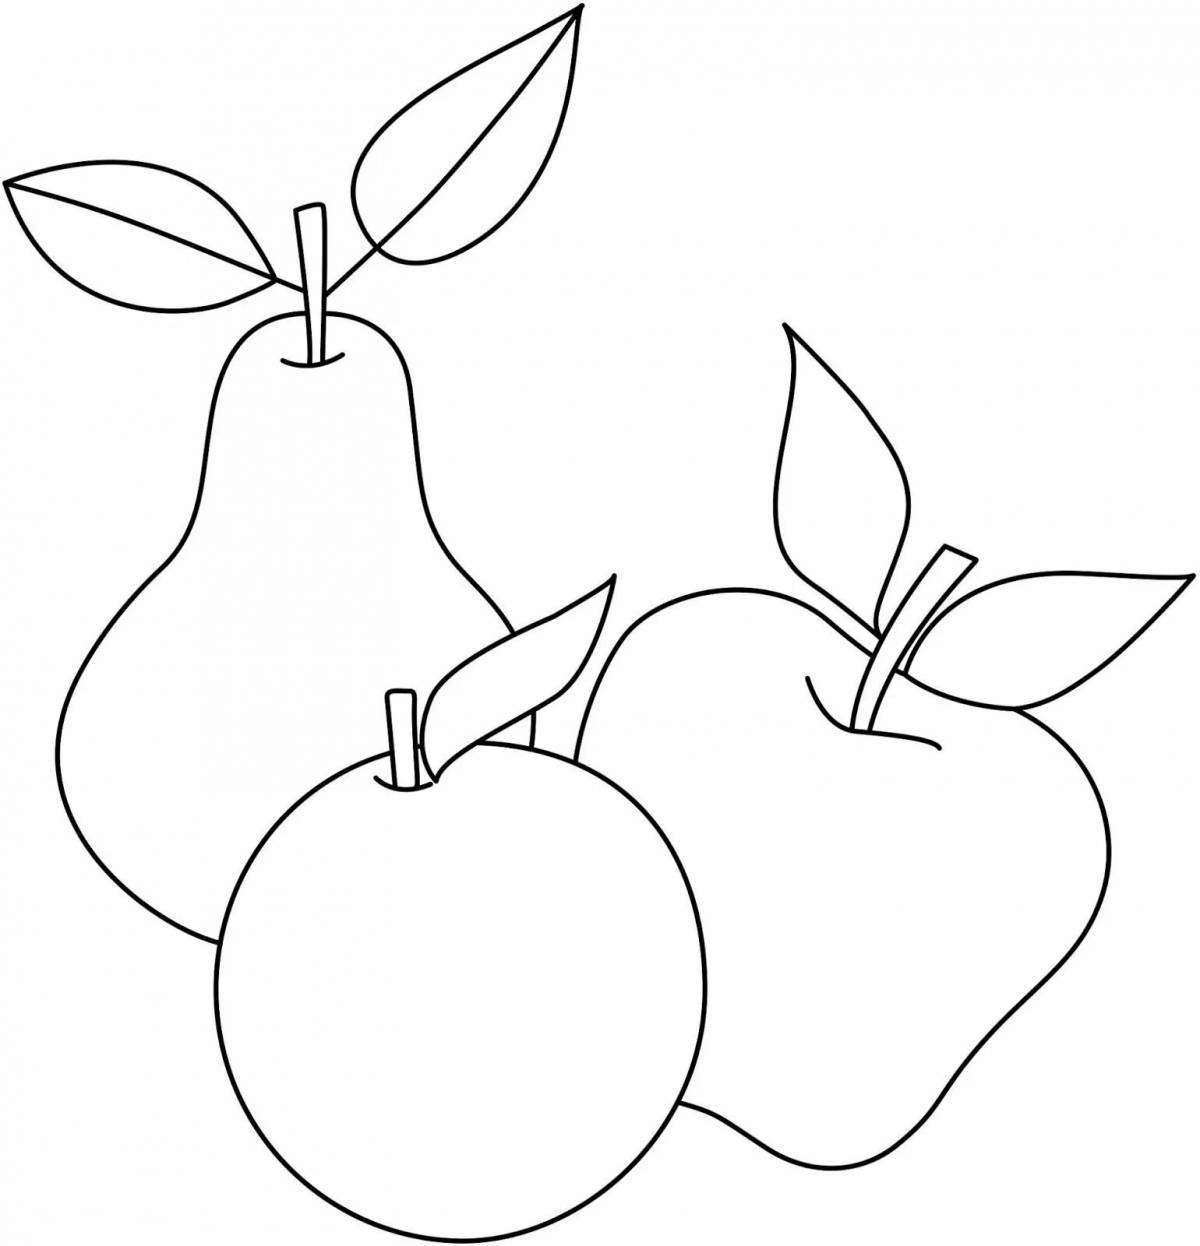 Joyful apple and pear coloring book